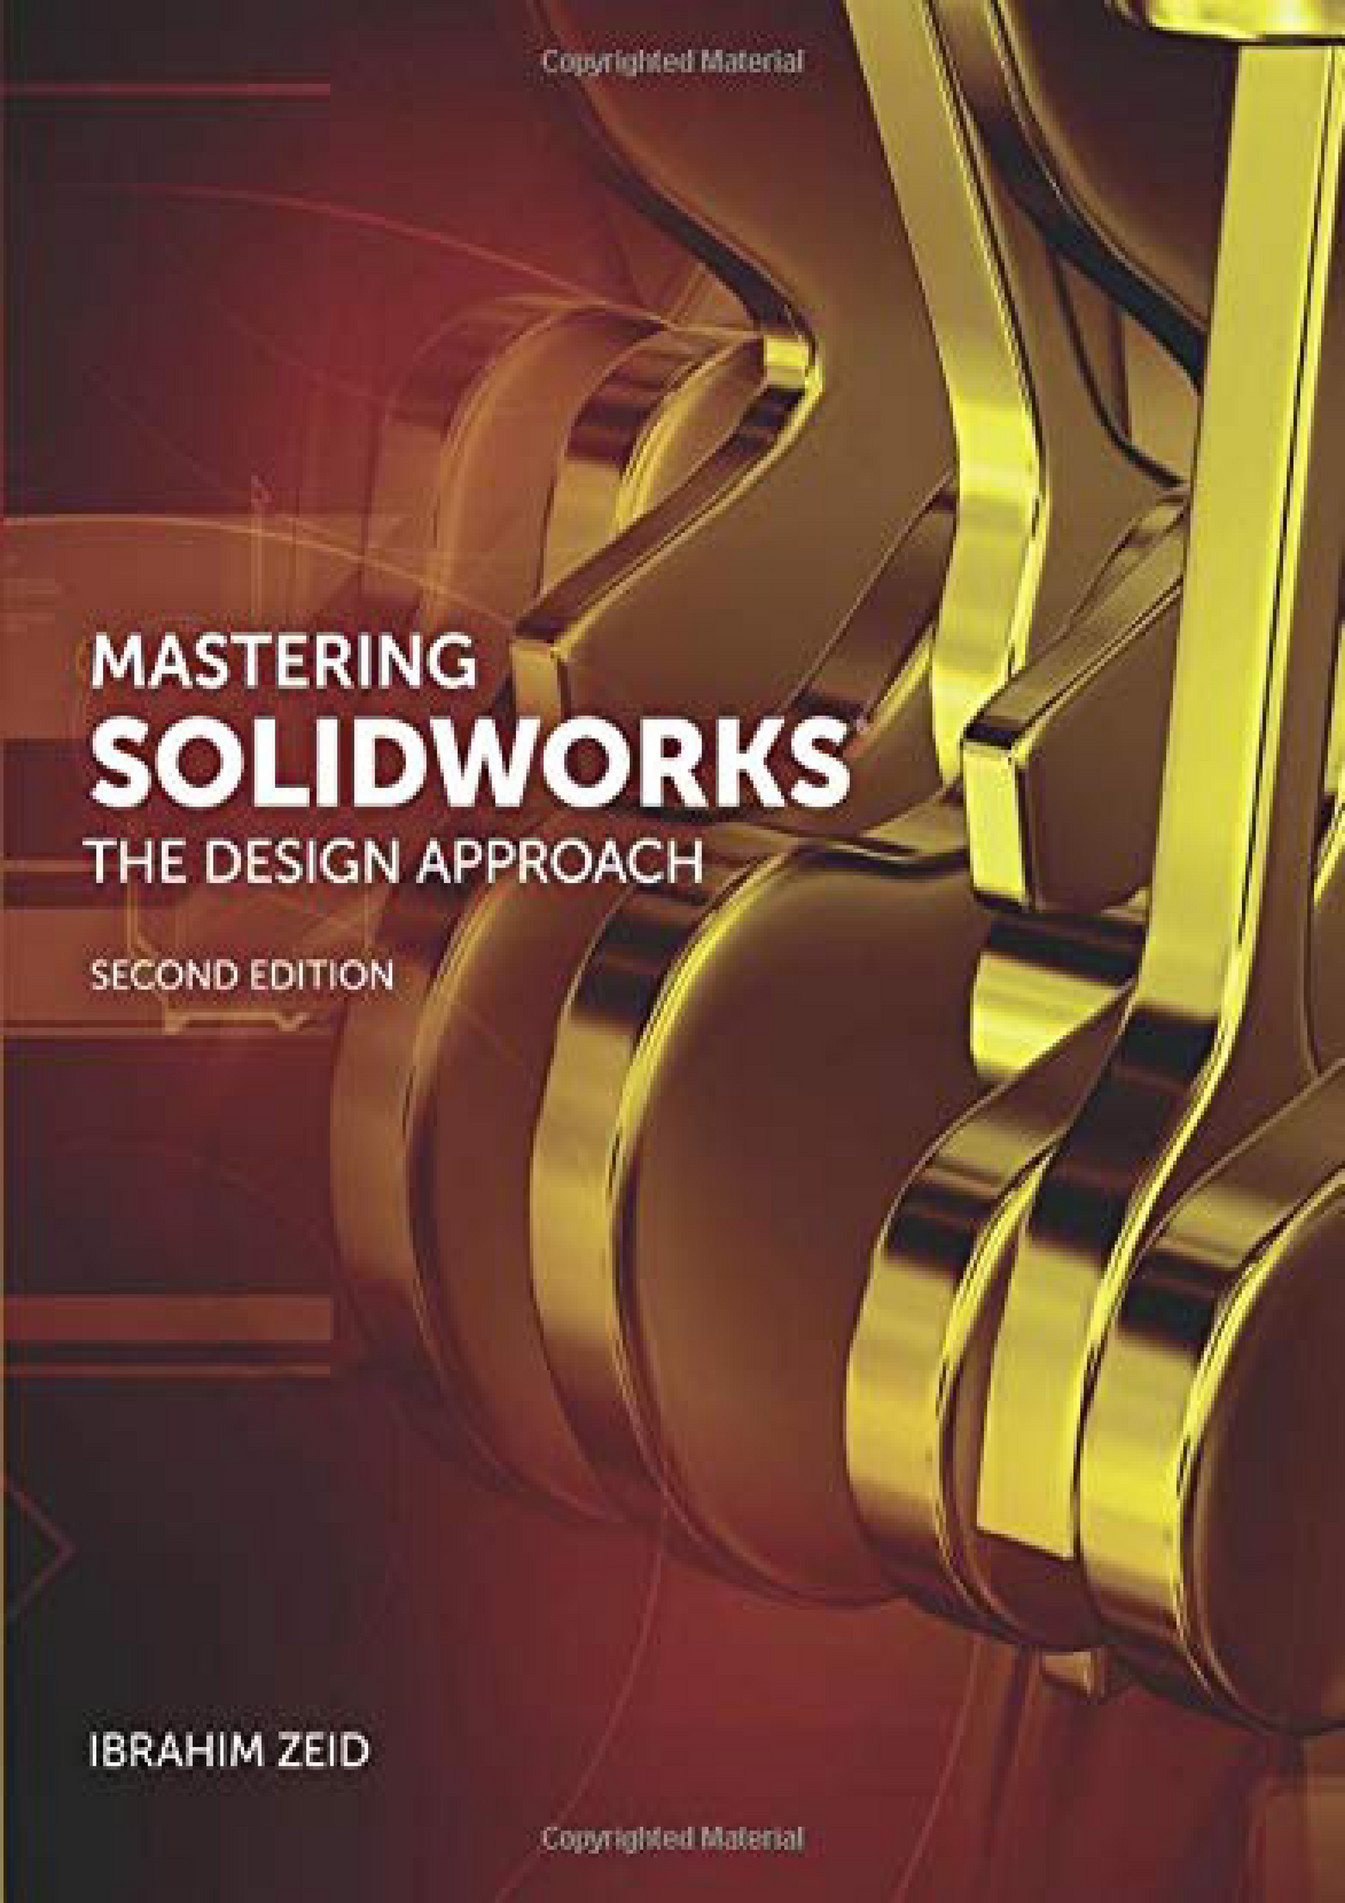 solidworks 2012 tutorial ebook free download